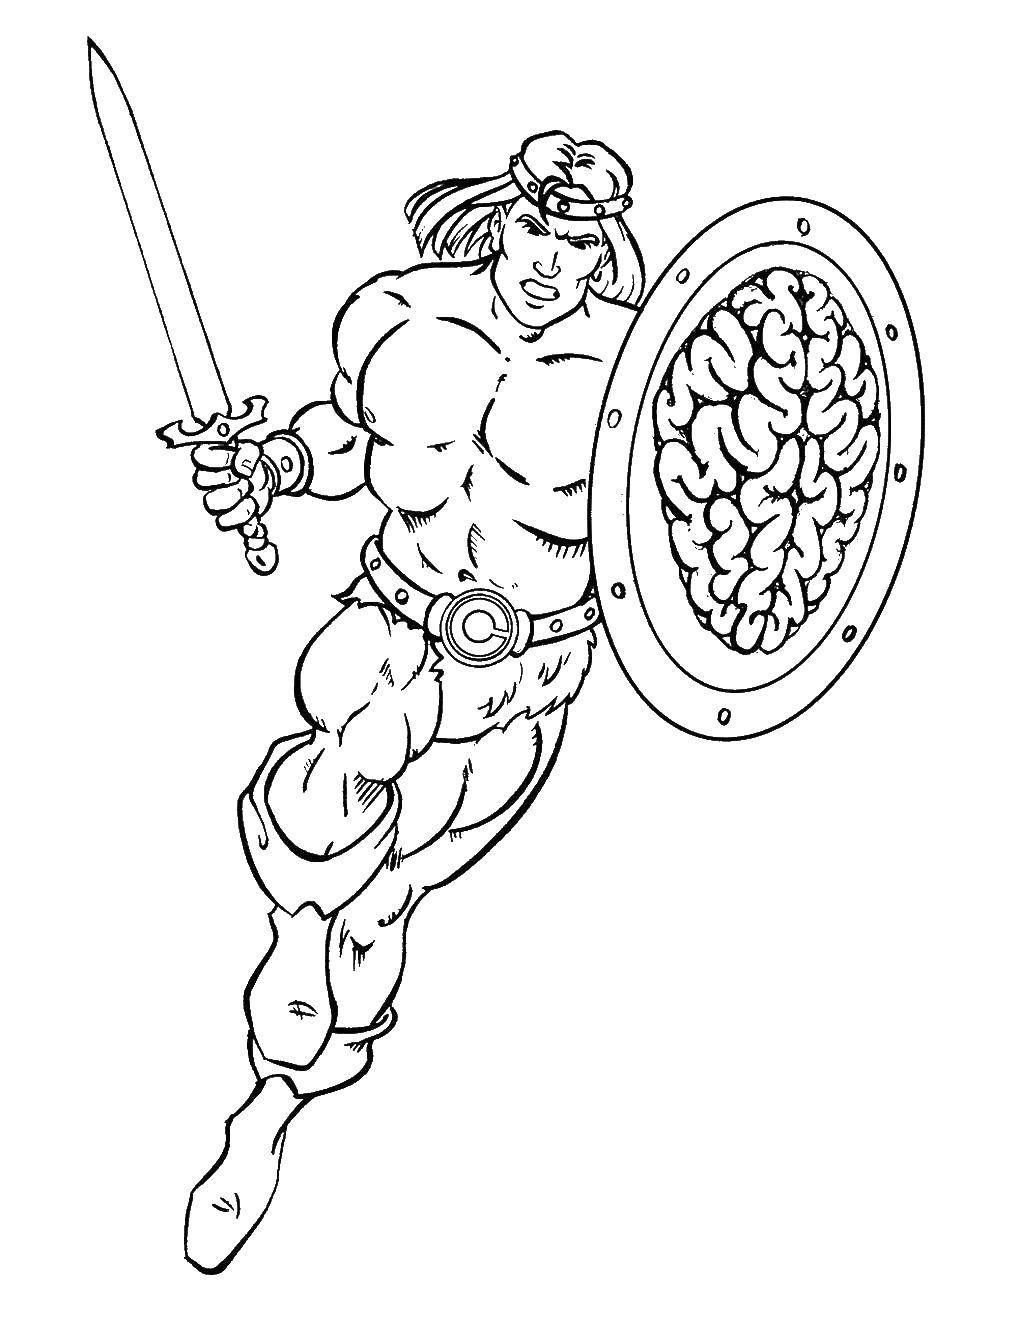 Online coloring pages Gladiator, poisk.